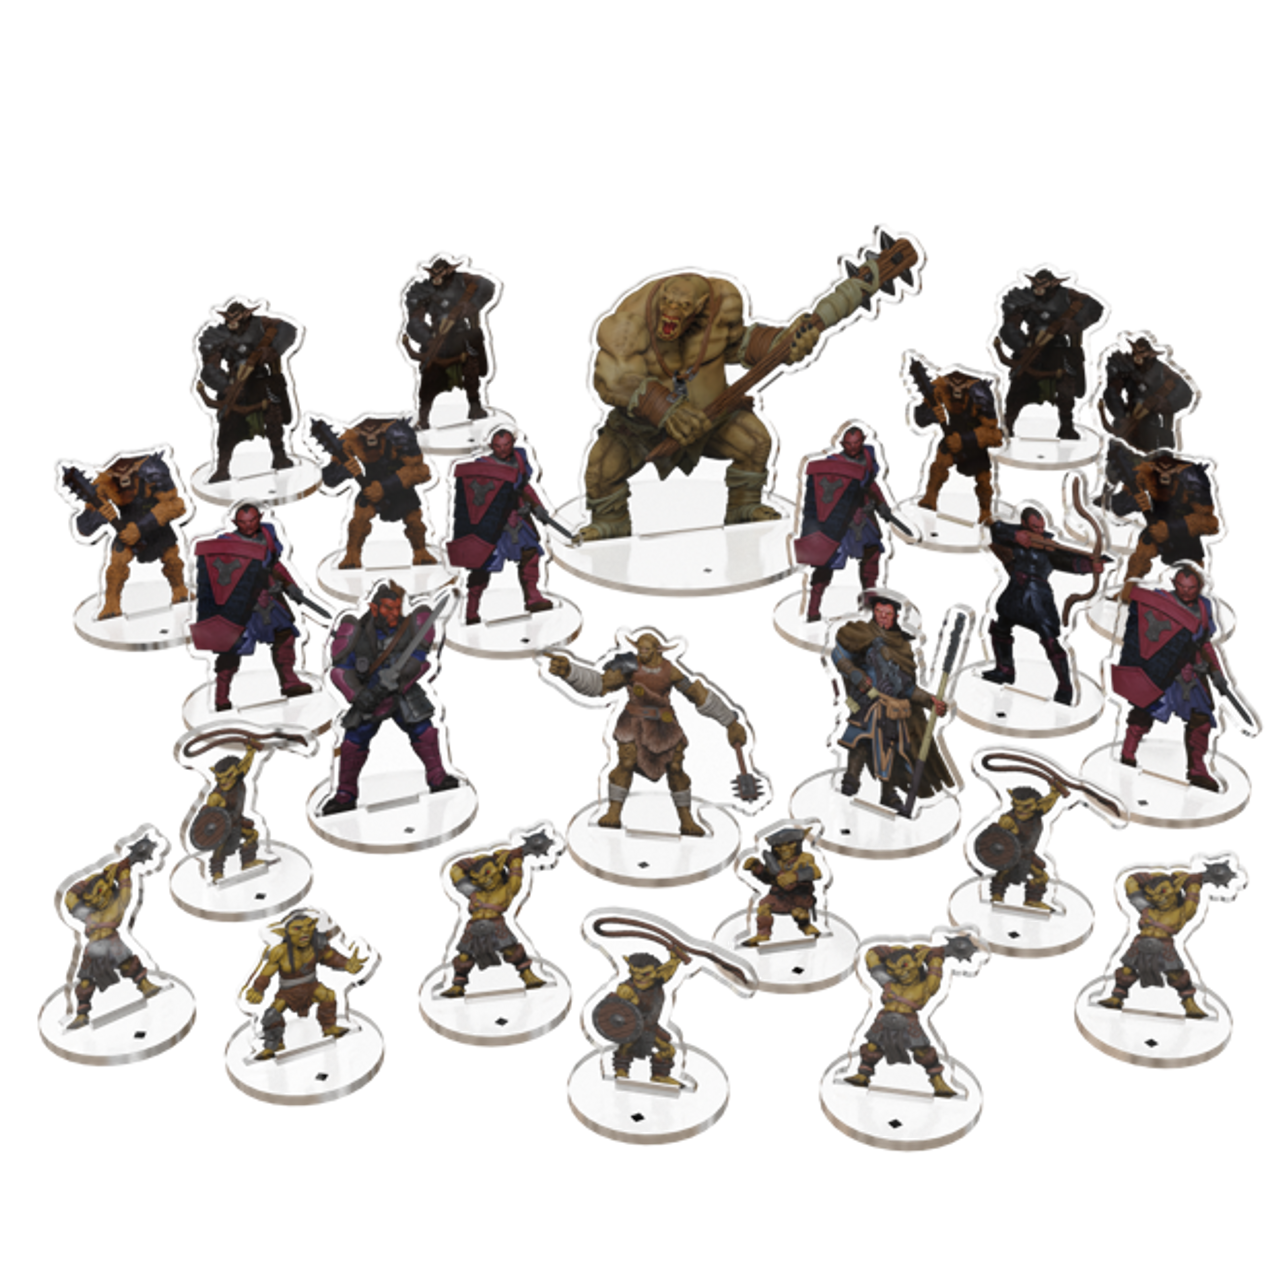 D&D Idols of the Realms 2D Acrylic Miniatures: Goblinoids